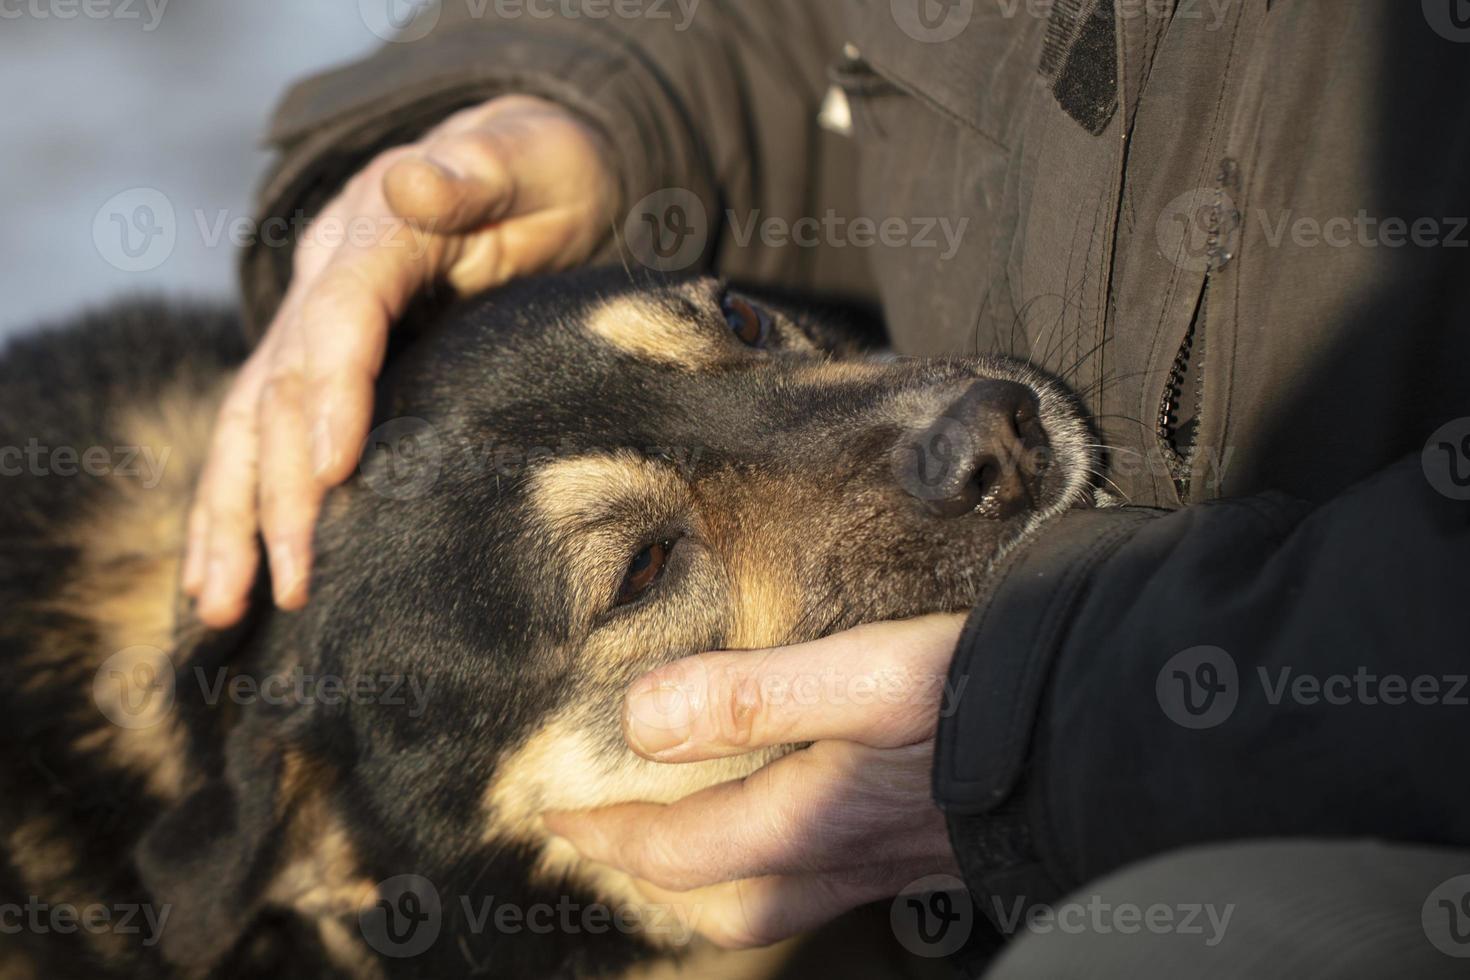 la mano acaricia al perro con ojos tristes. foto